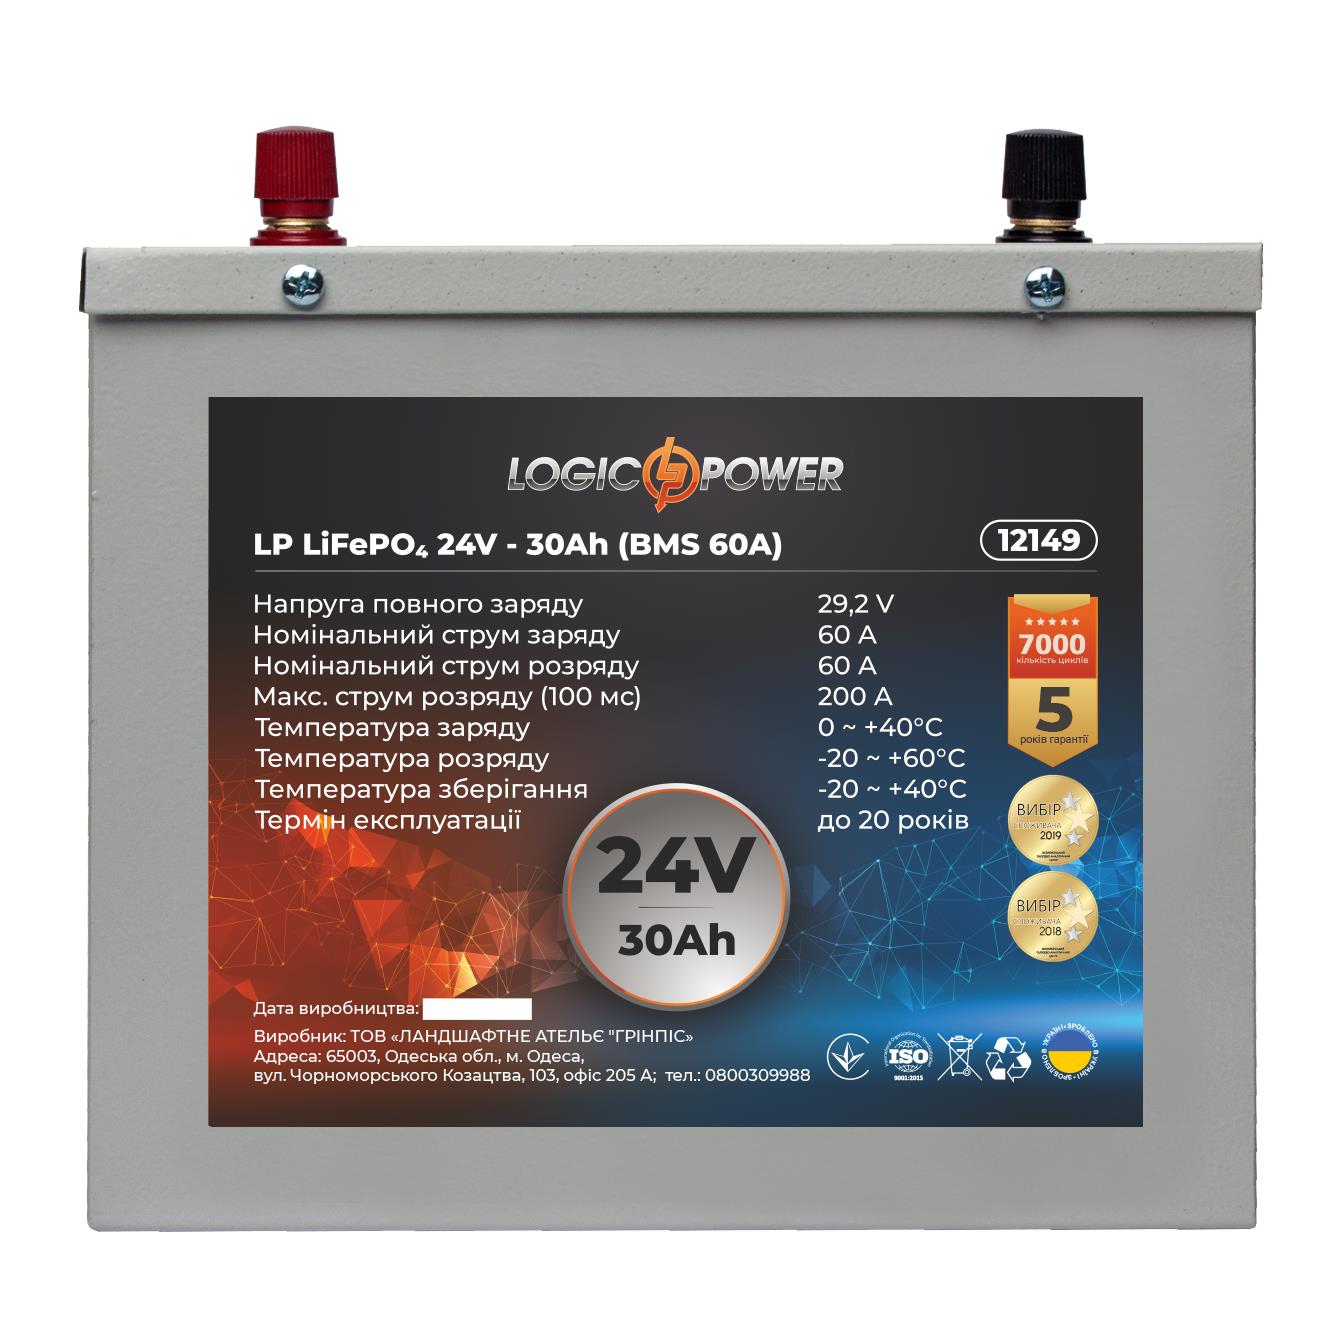 LogicPower LP LiFePO4 24V - 30 Ah (BMS 60A) метал (12149)